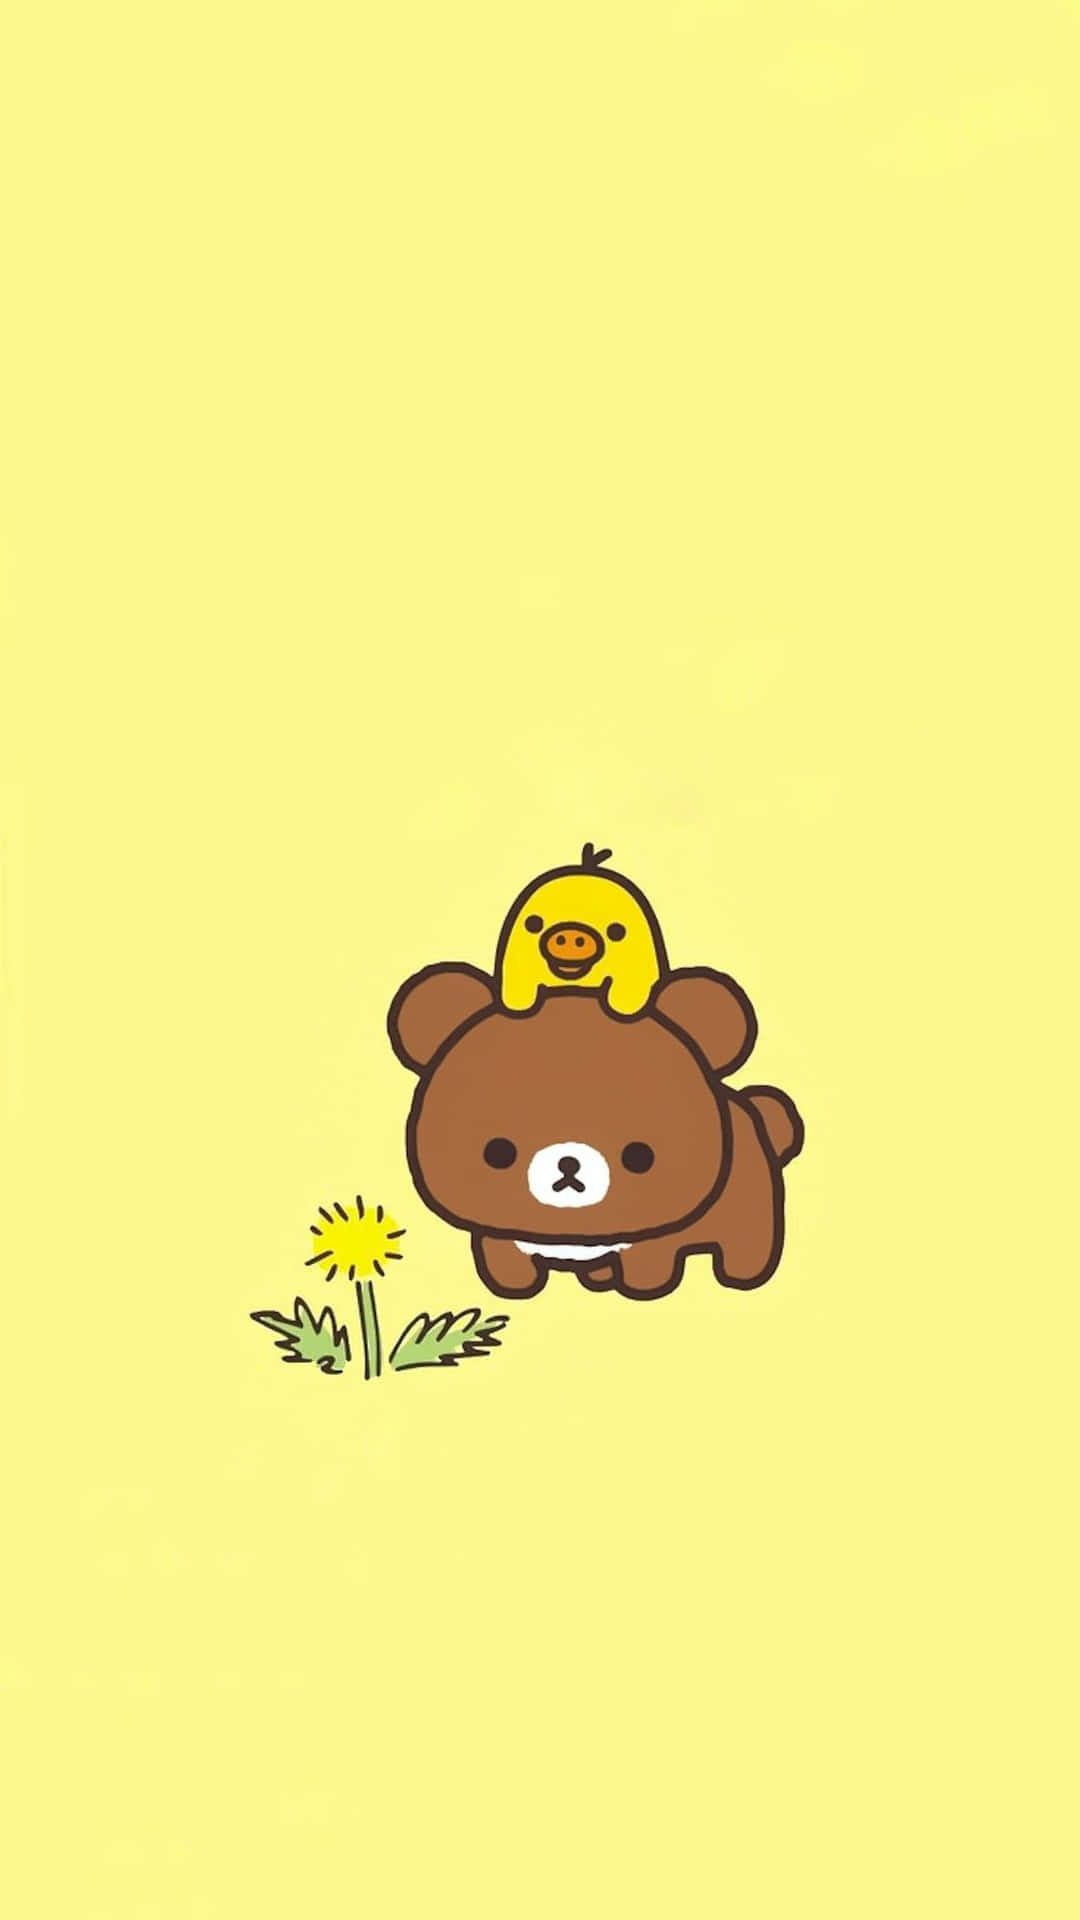 A Heartwarming Scene of a Cute Rilakkuma Teddy Bear Wallpaper